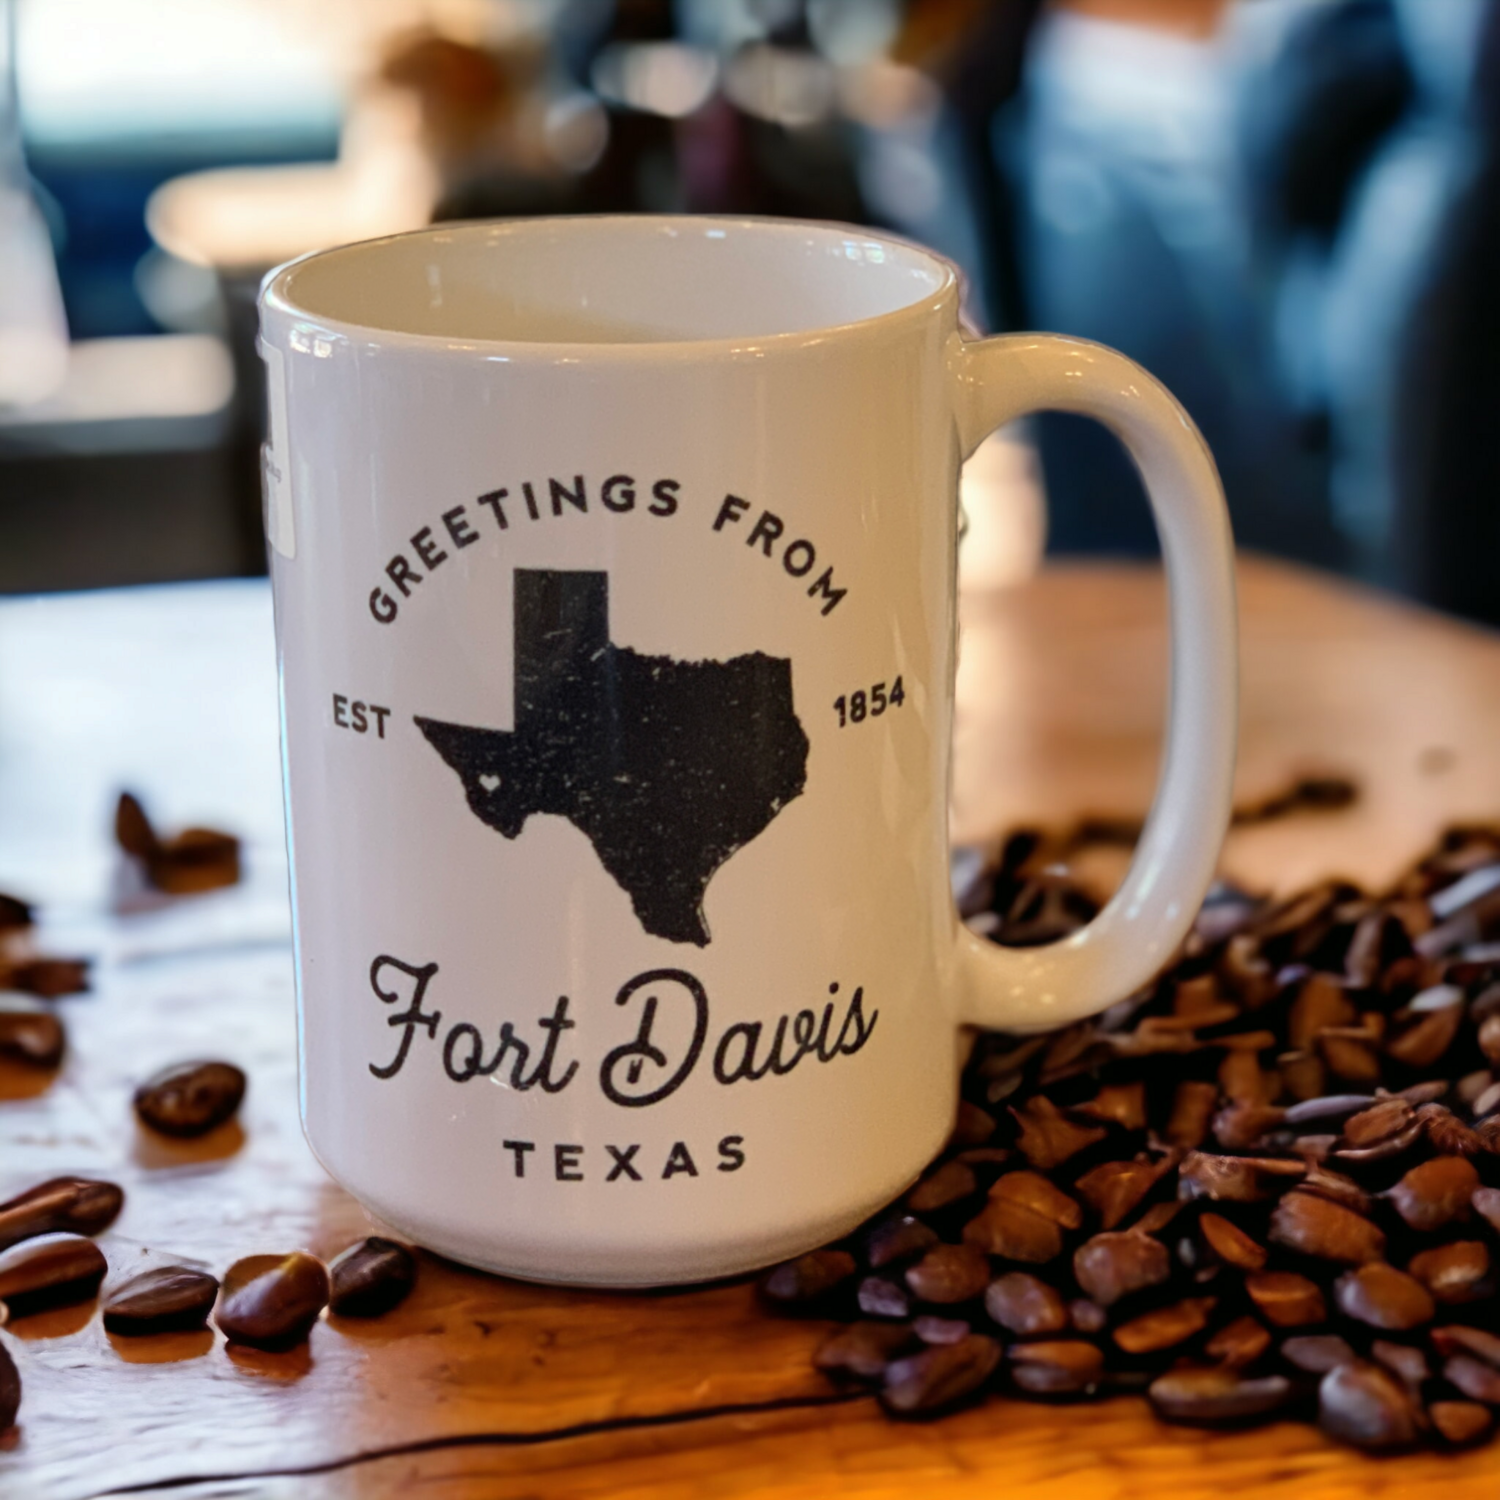 Greetings From Fort Davis Texas Mug